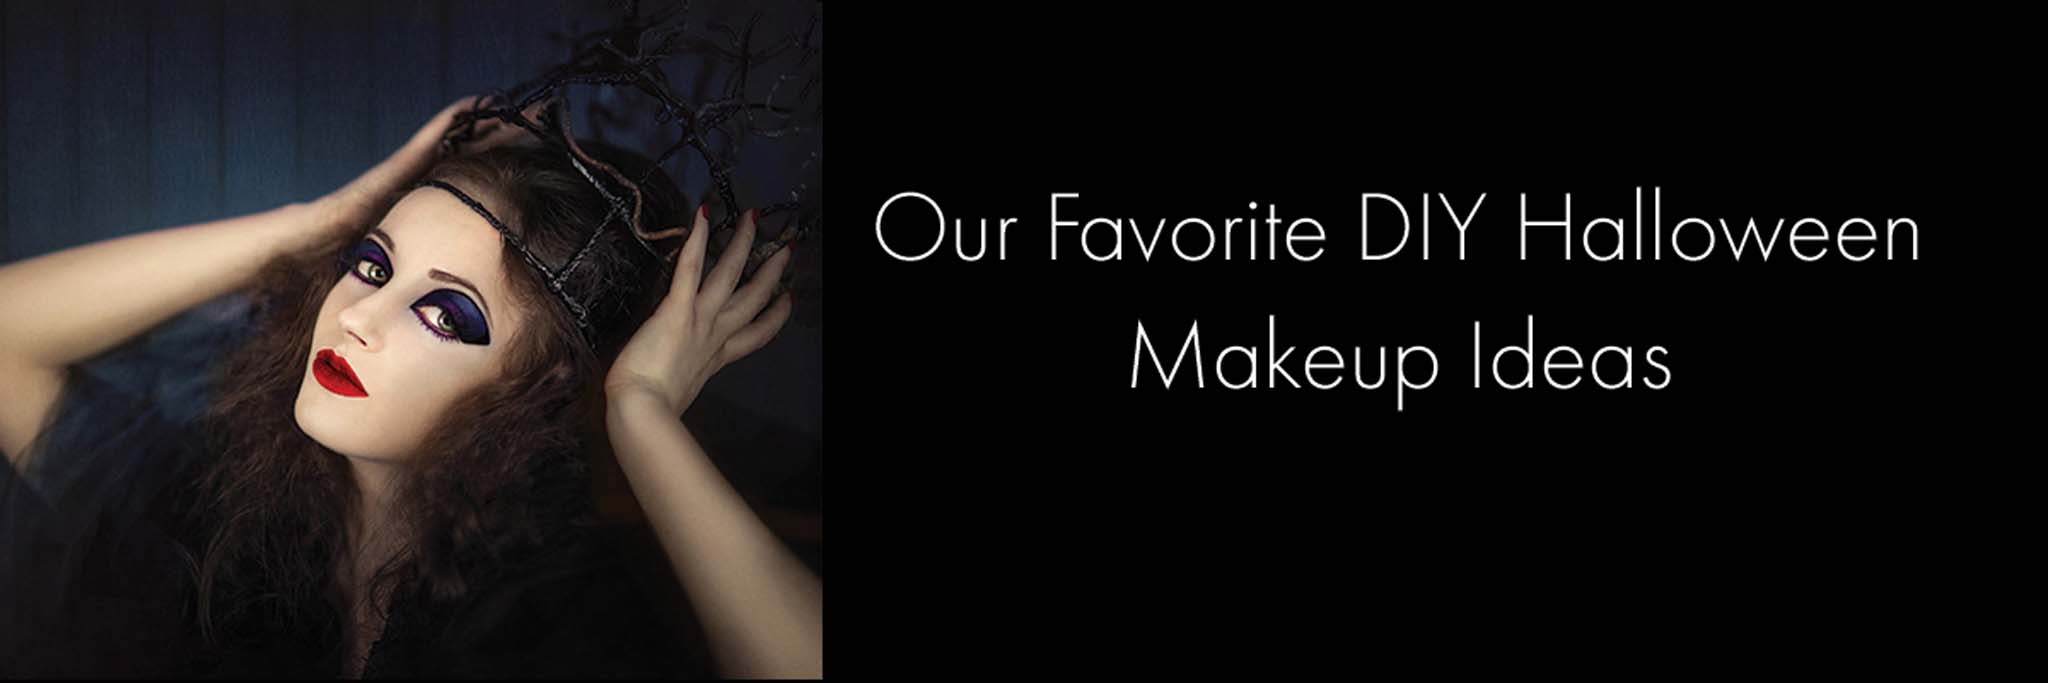 Our Favorite DIY Halloween Makeup Ideas